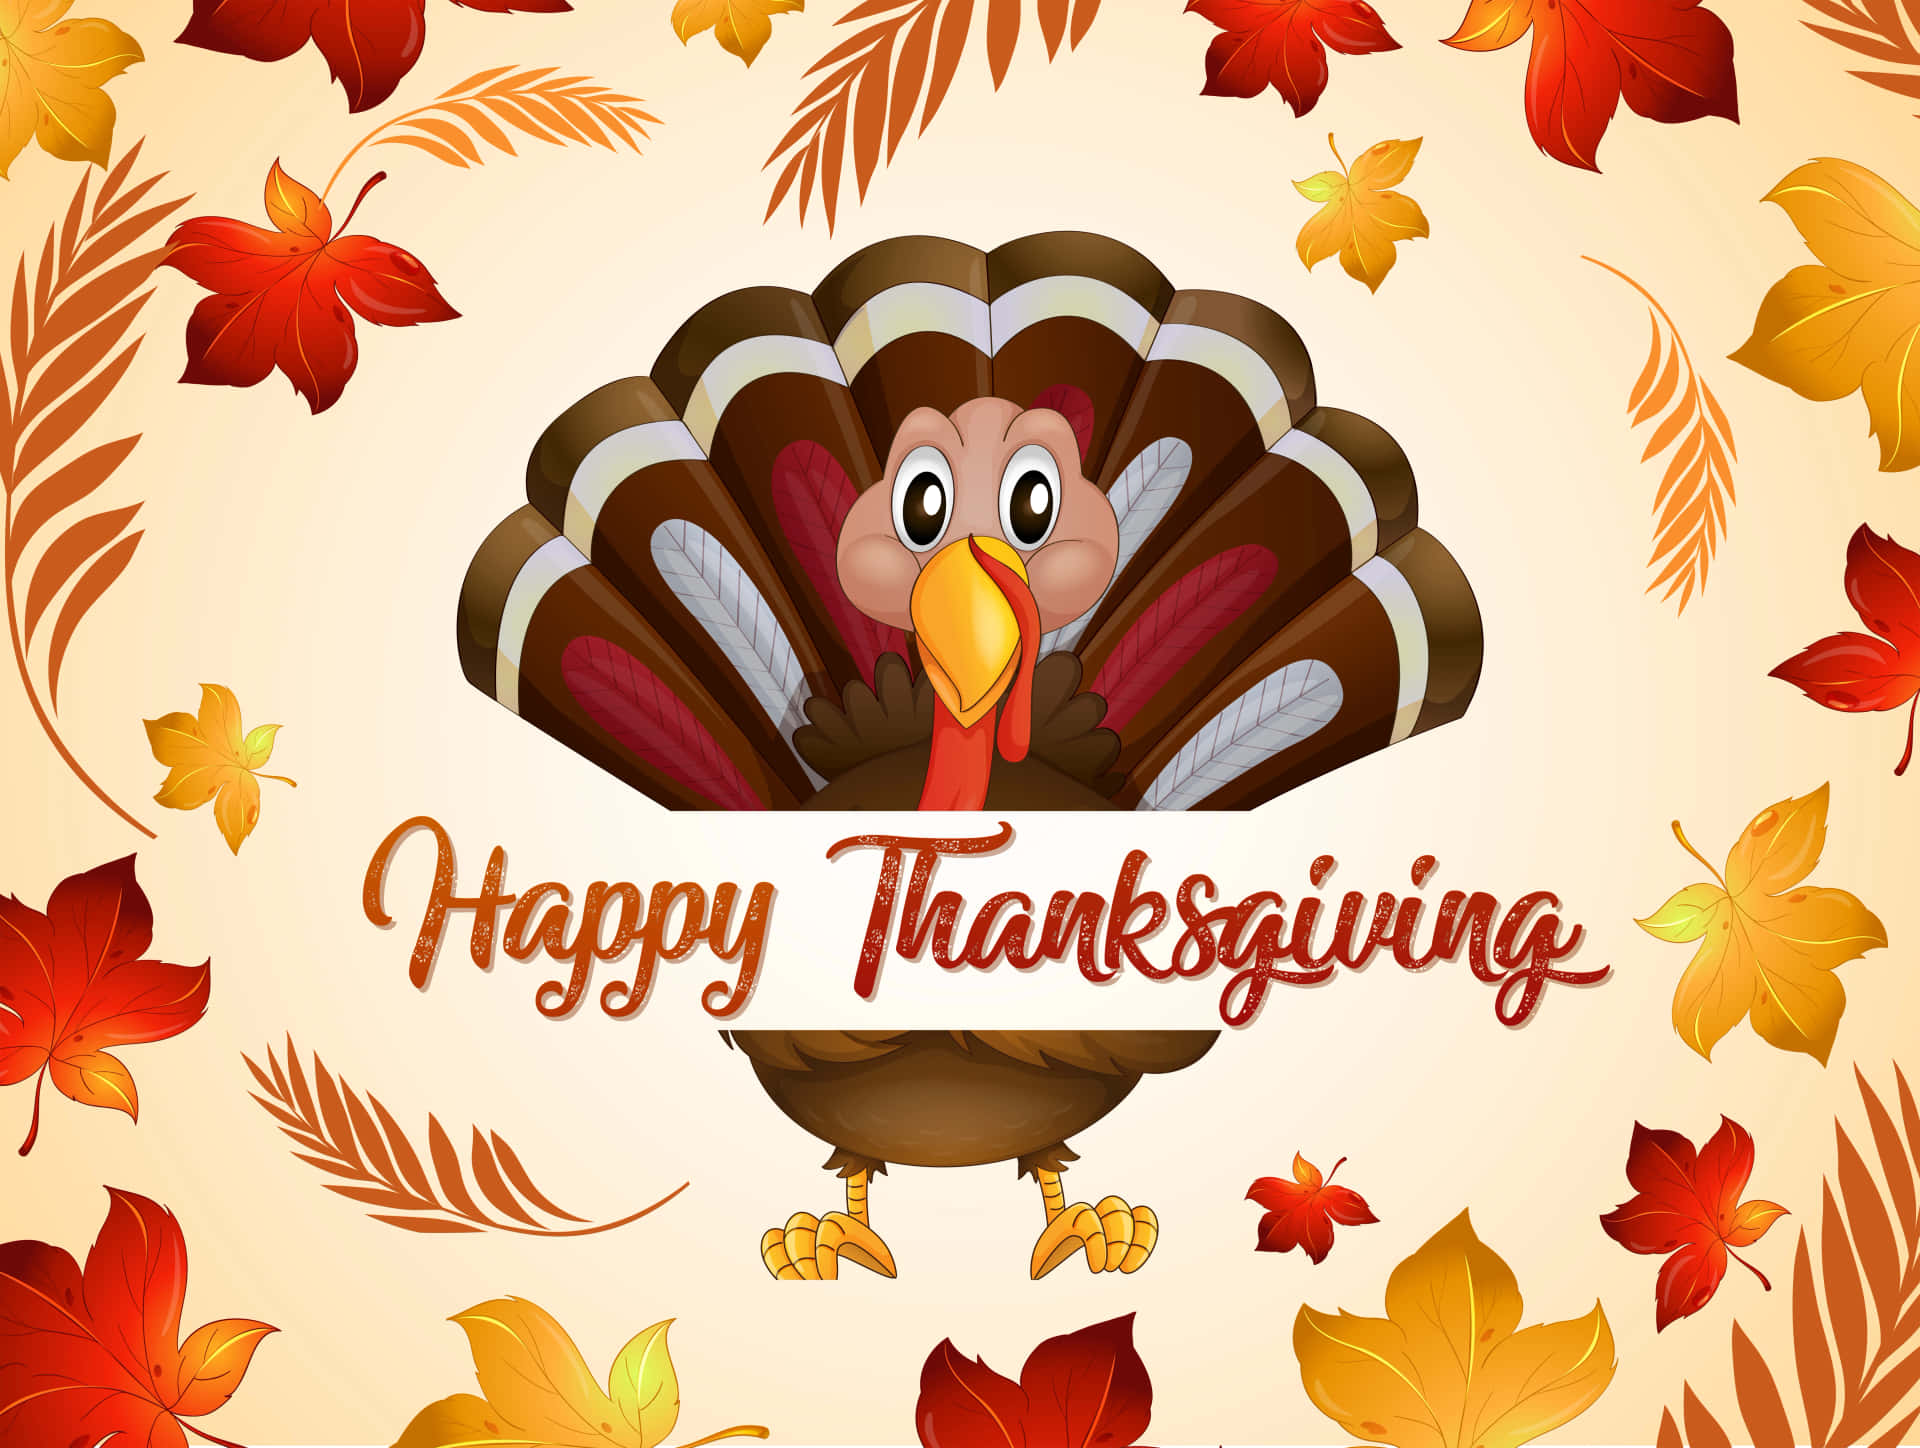 Celebrate The Harvest Season - A Happy Thanksgiving Image